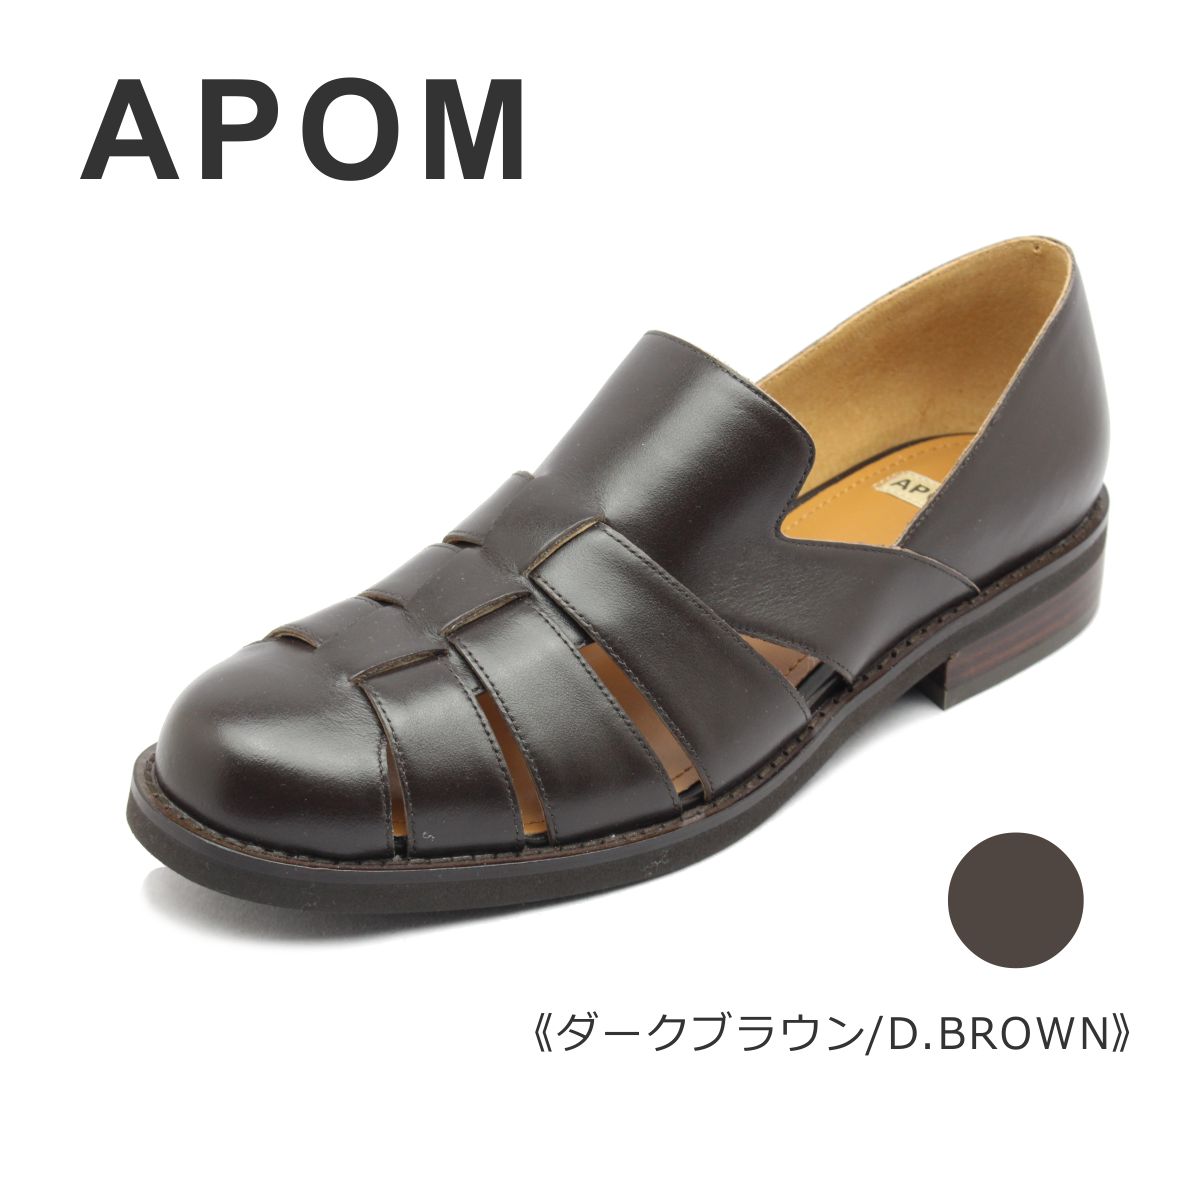 APOM アポム レディース グルカ サンダル 222 スリッポン 本革 靴 黒 白 ブラック ホワイト ブラウン :apom222:ミッキー靴店  通販 